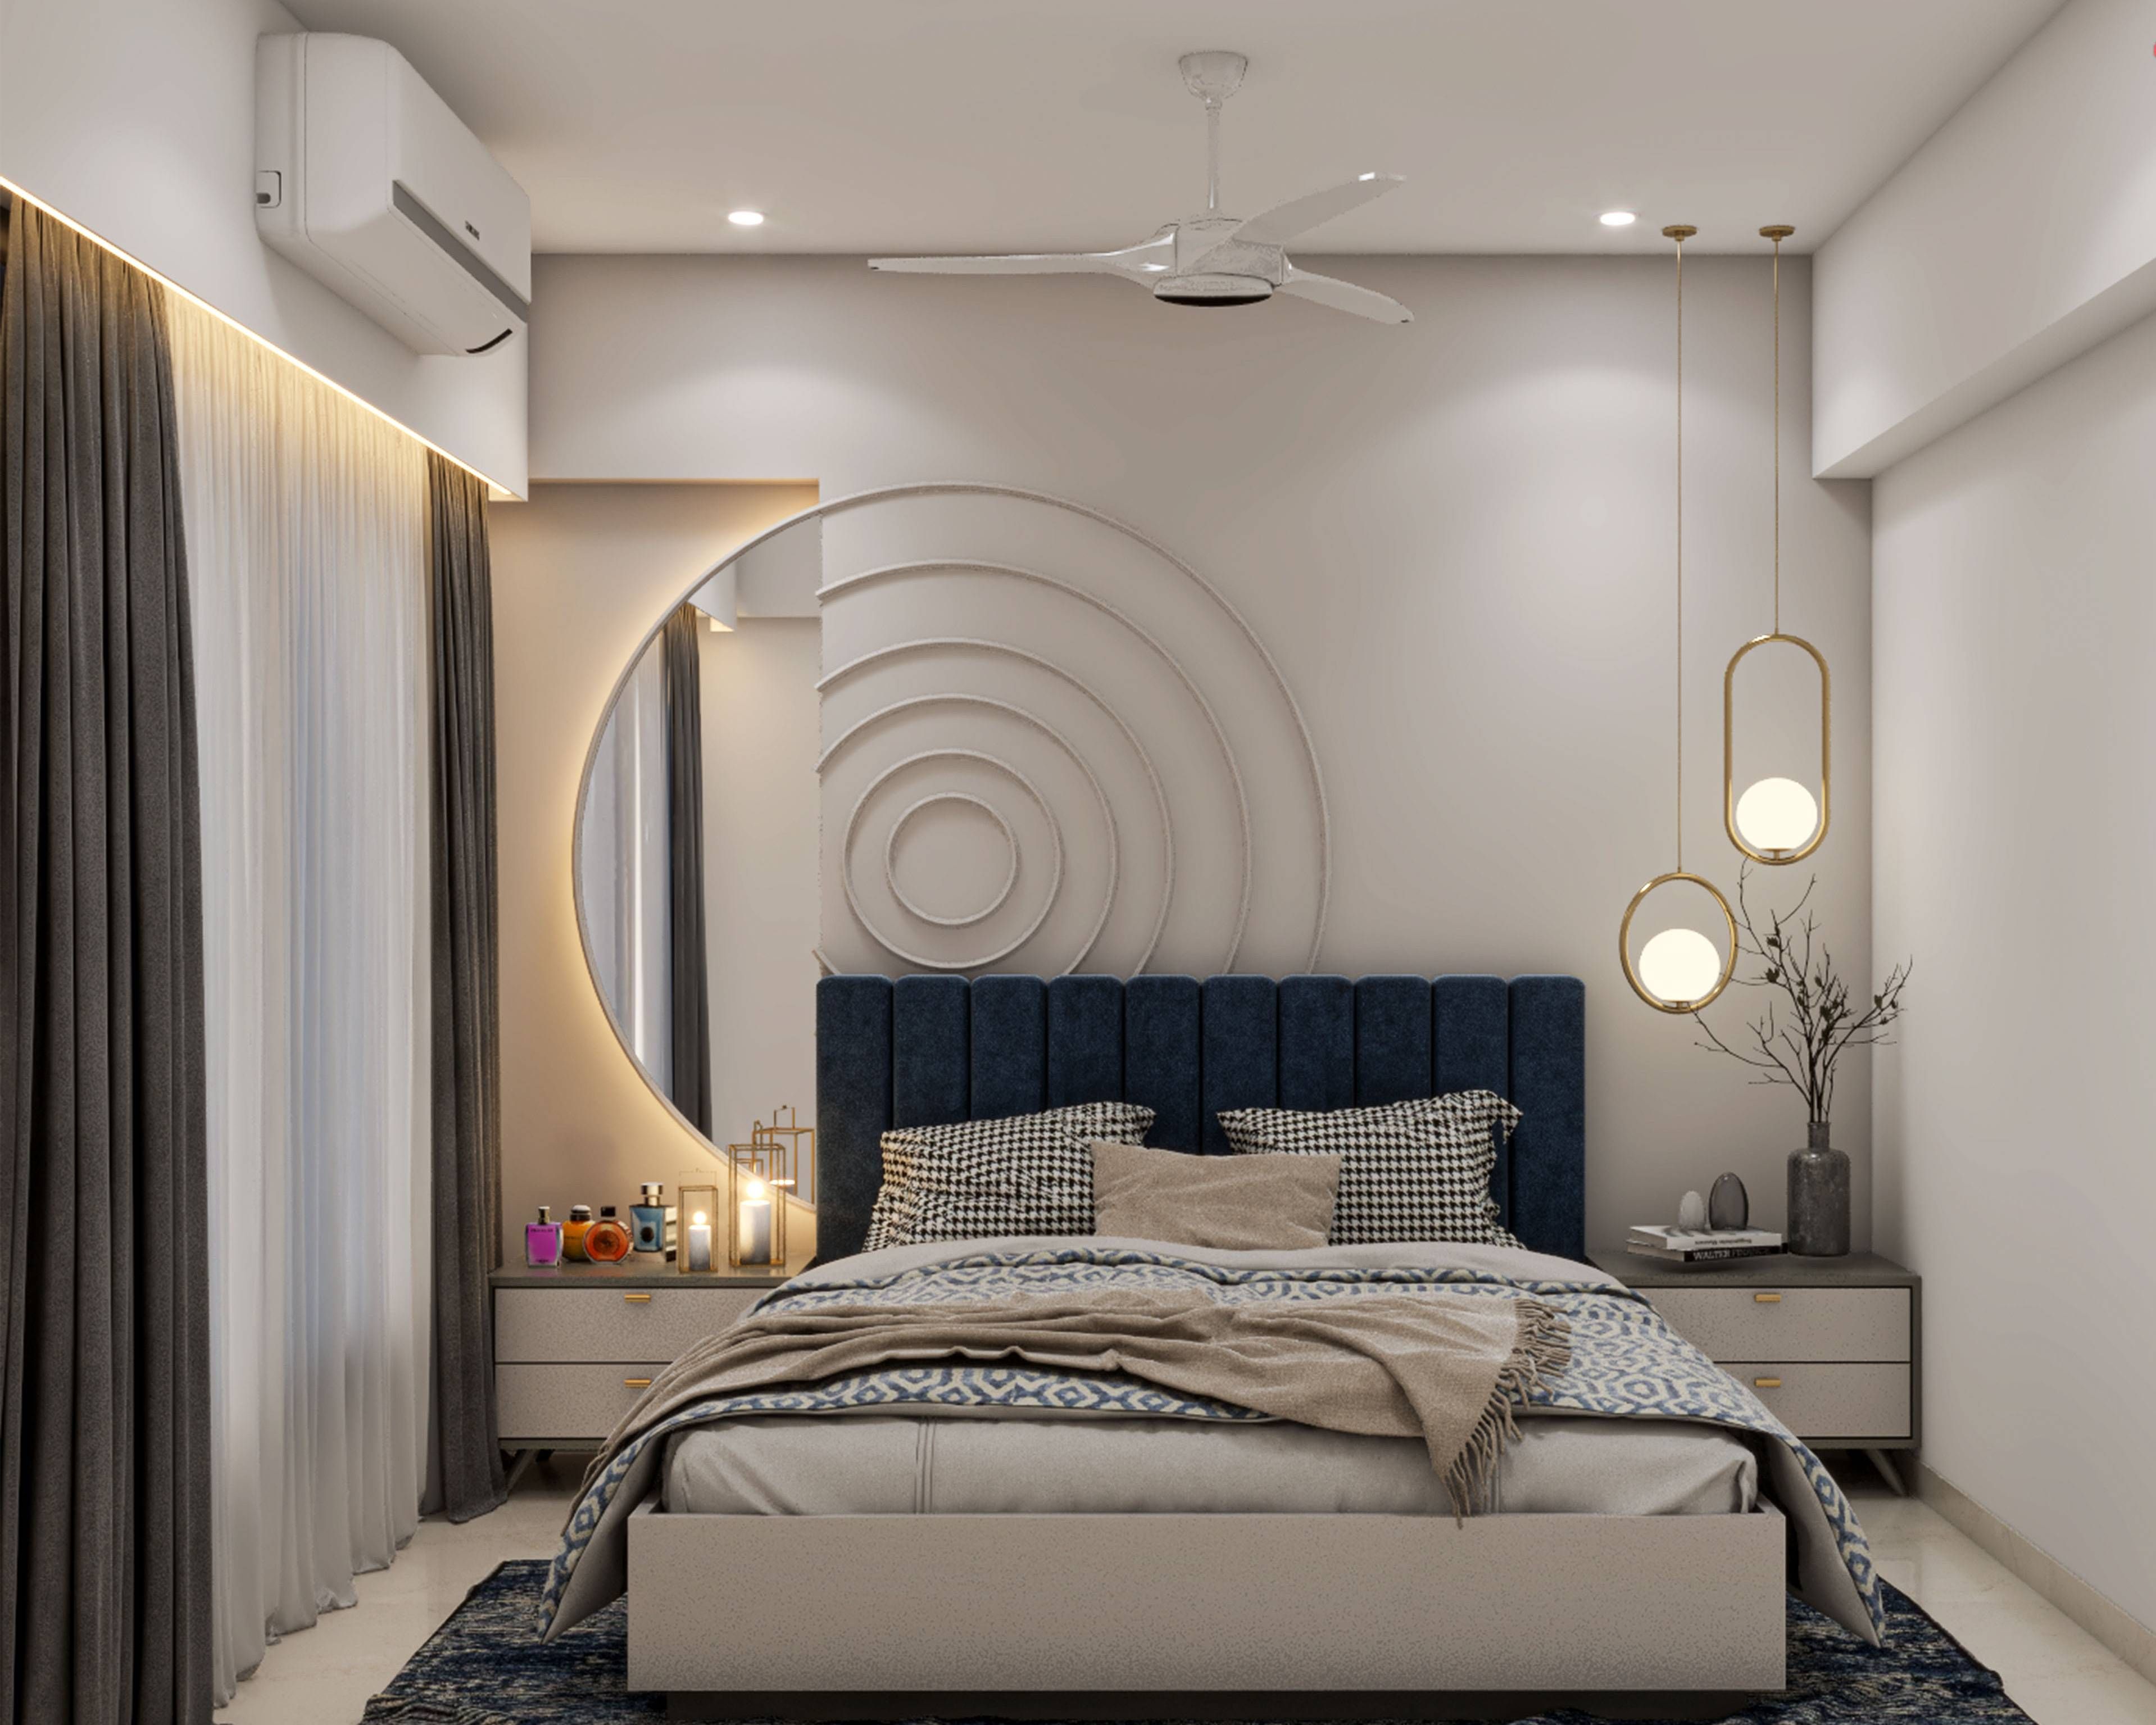 Modern Bedroom Design With Warm Lighting